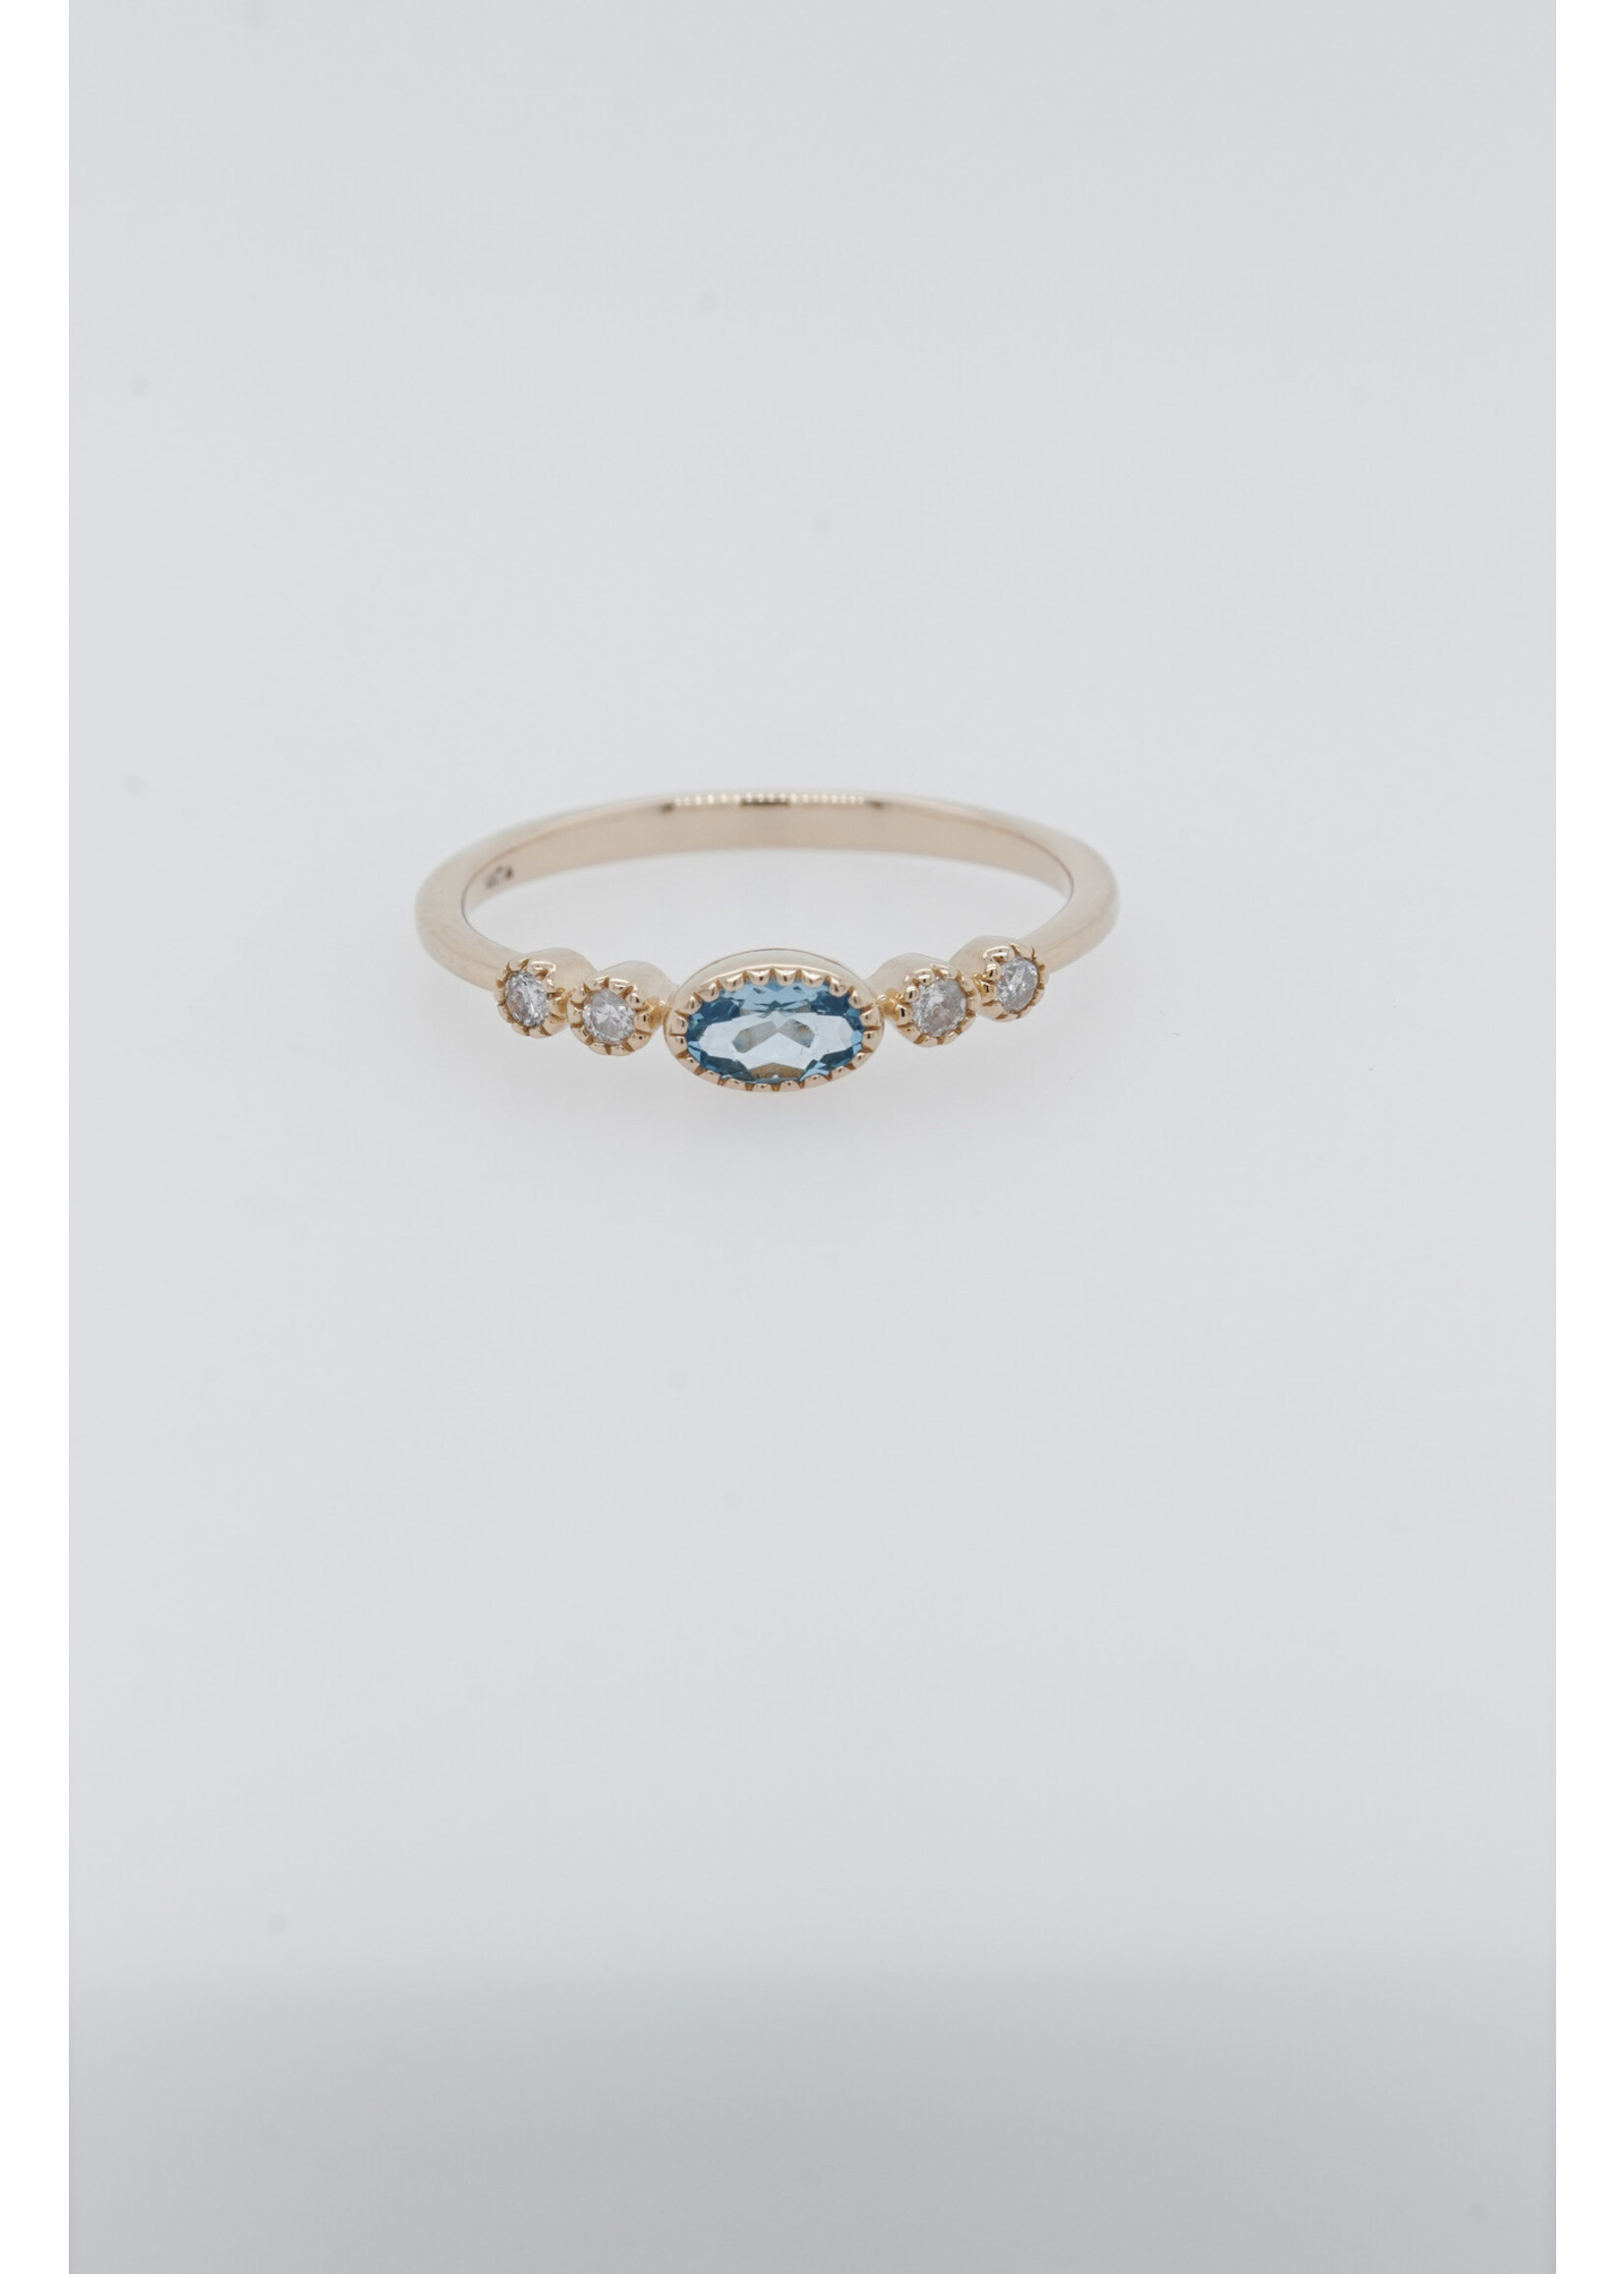 14KY 1.6g .10ctw Diamond .22ctw Blue Topaz Fashion Ring (size 7)